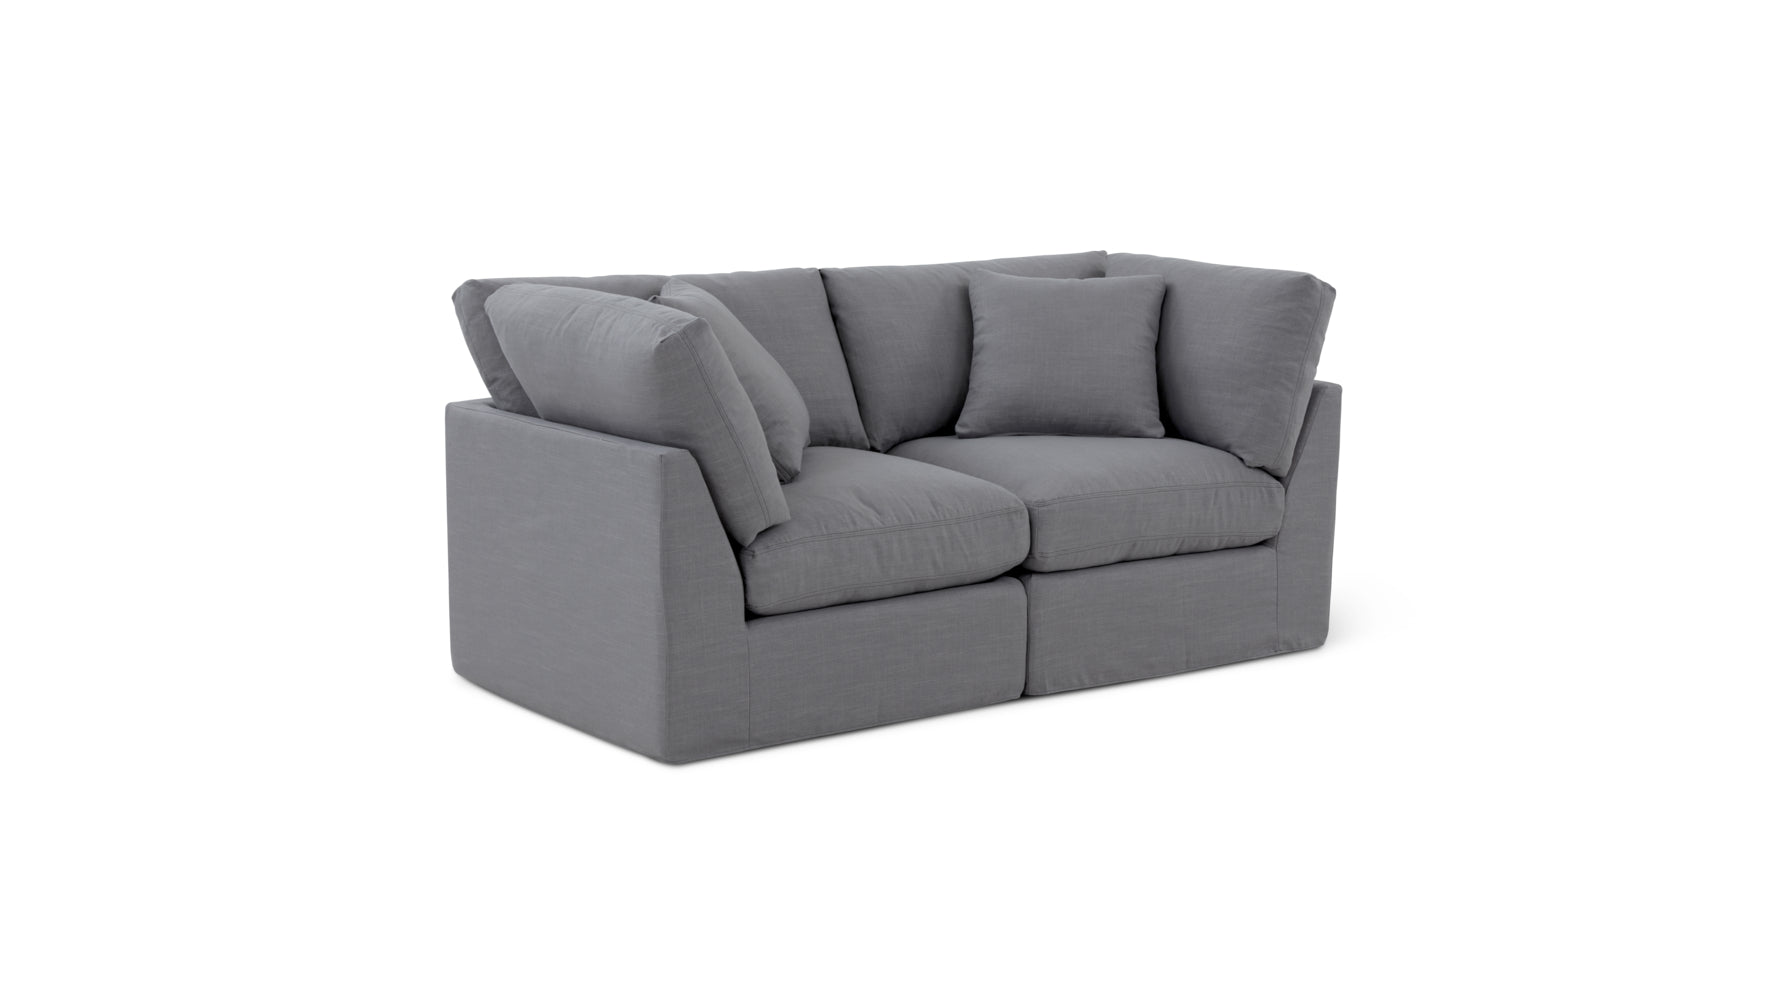 Get Together™ 2-Piece Modular Sofa, Standard, Moonlight - Image 2